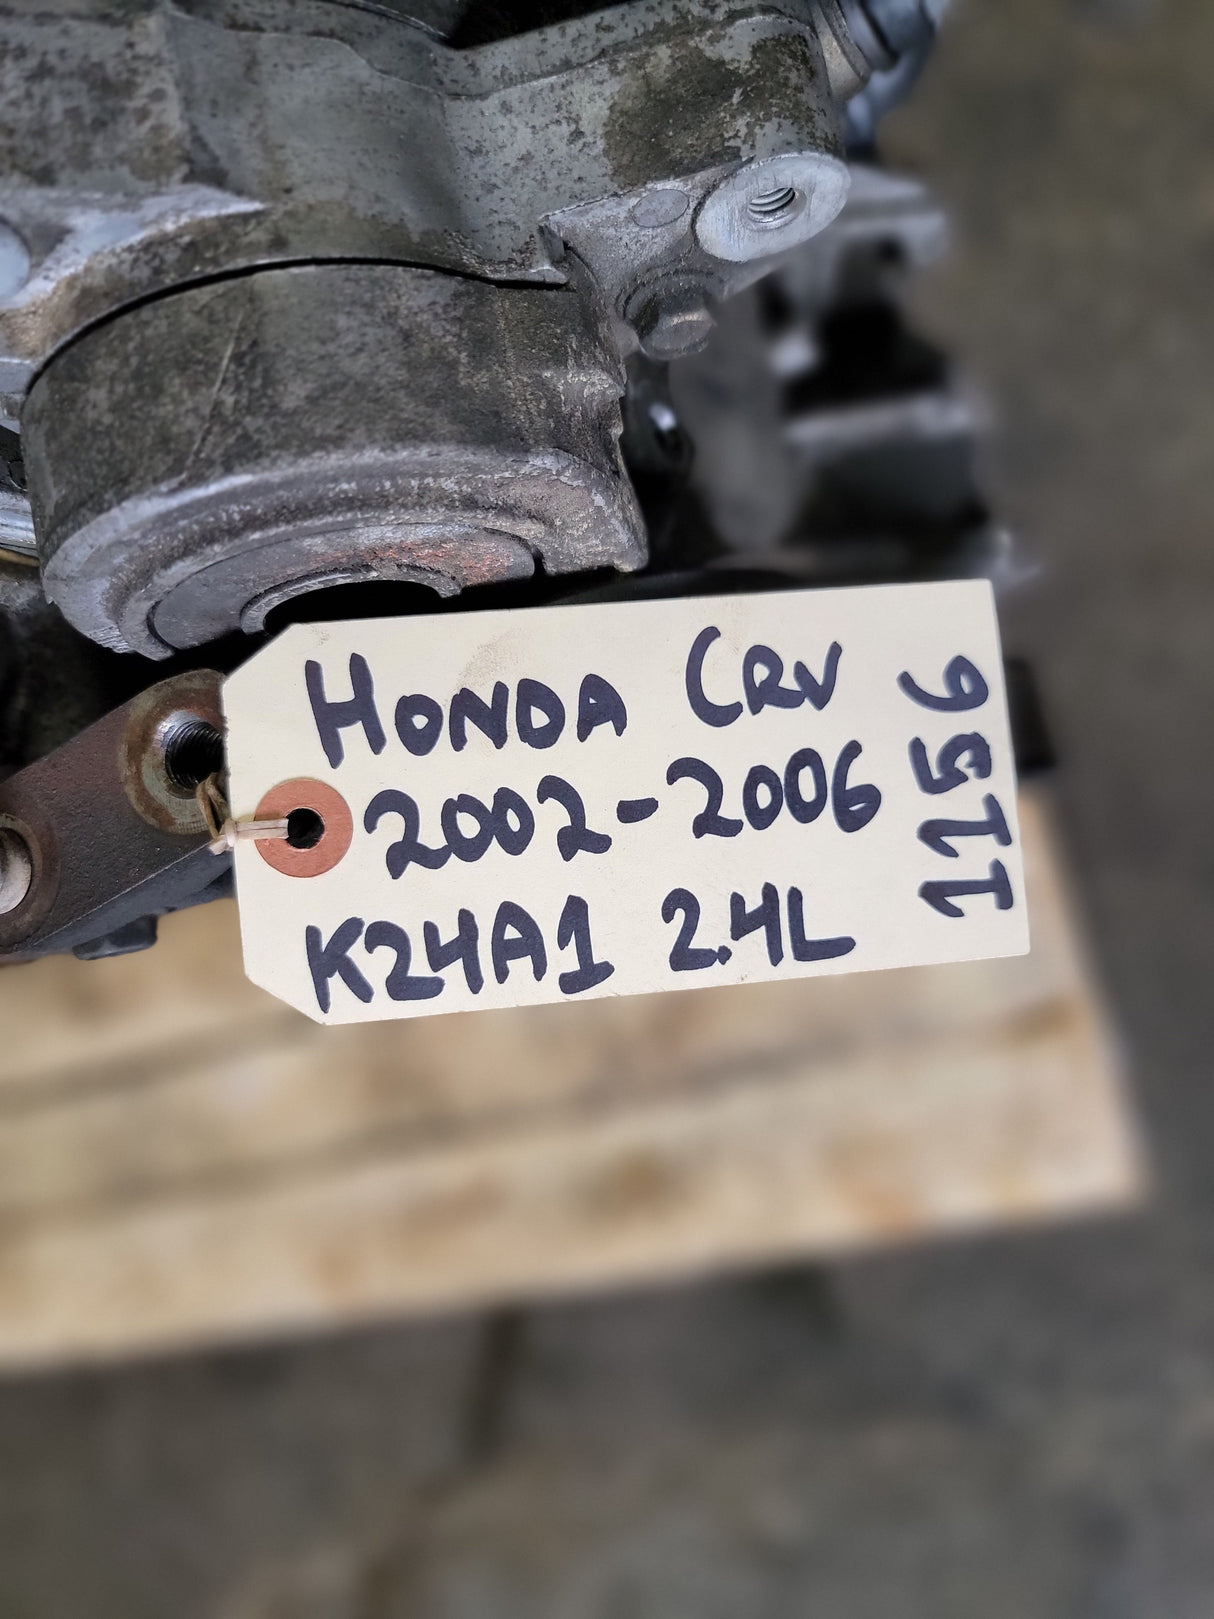 JDM Honda CRV 2002-2006 K24A1 2.4L Engine only / Stock No: 1156